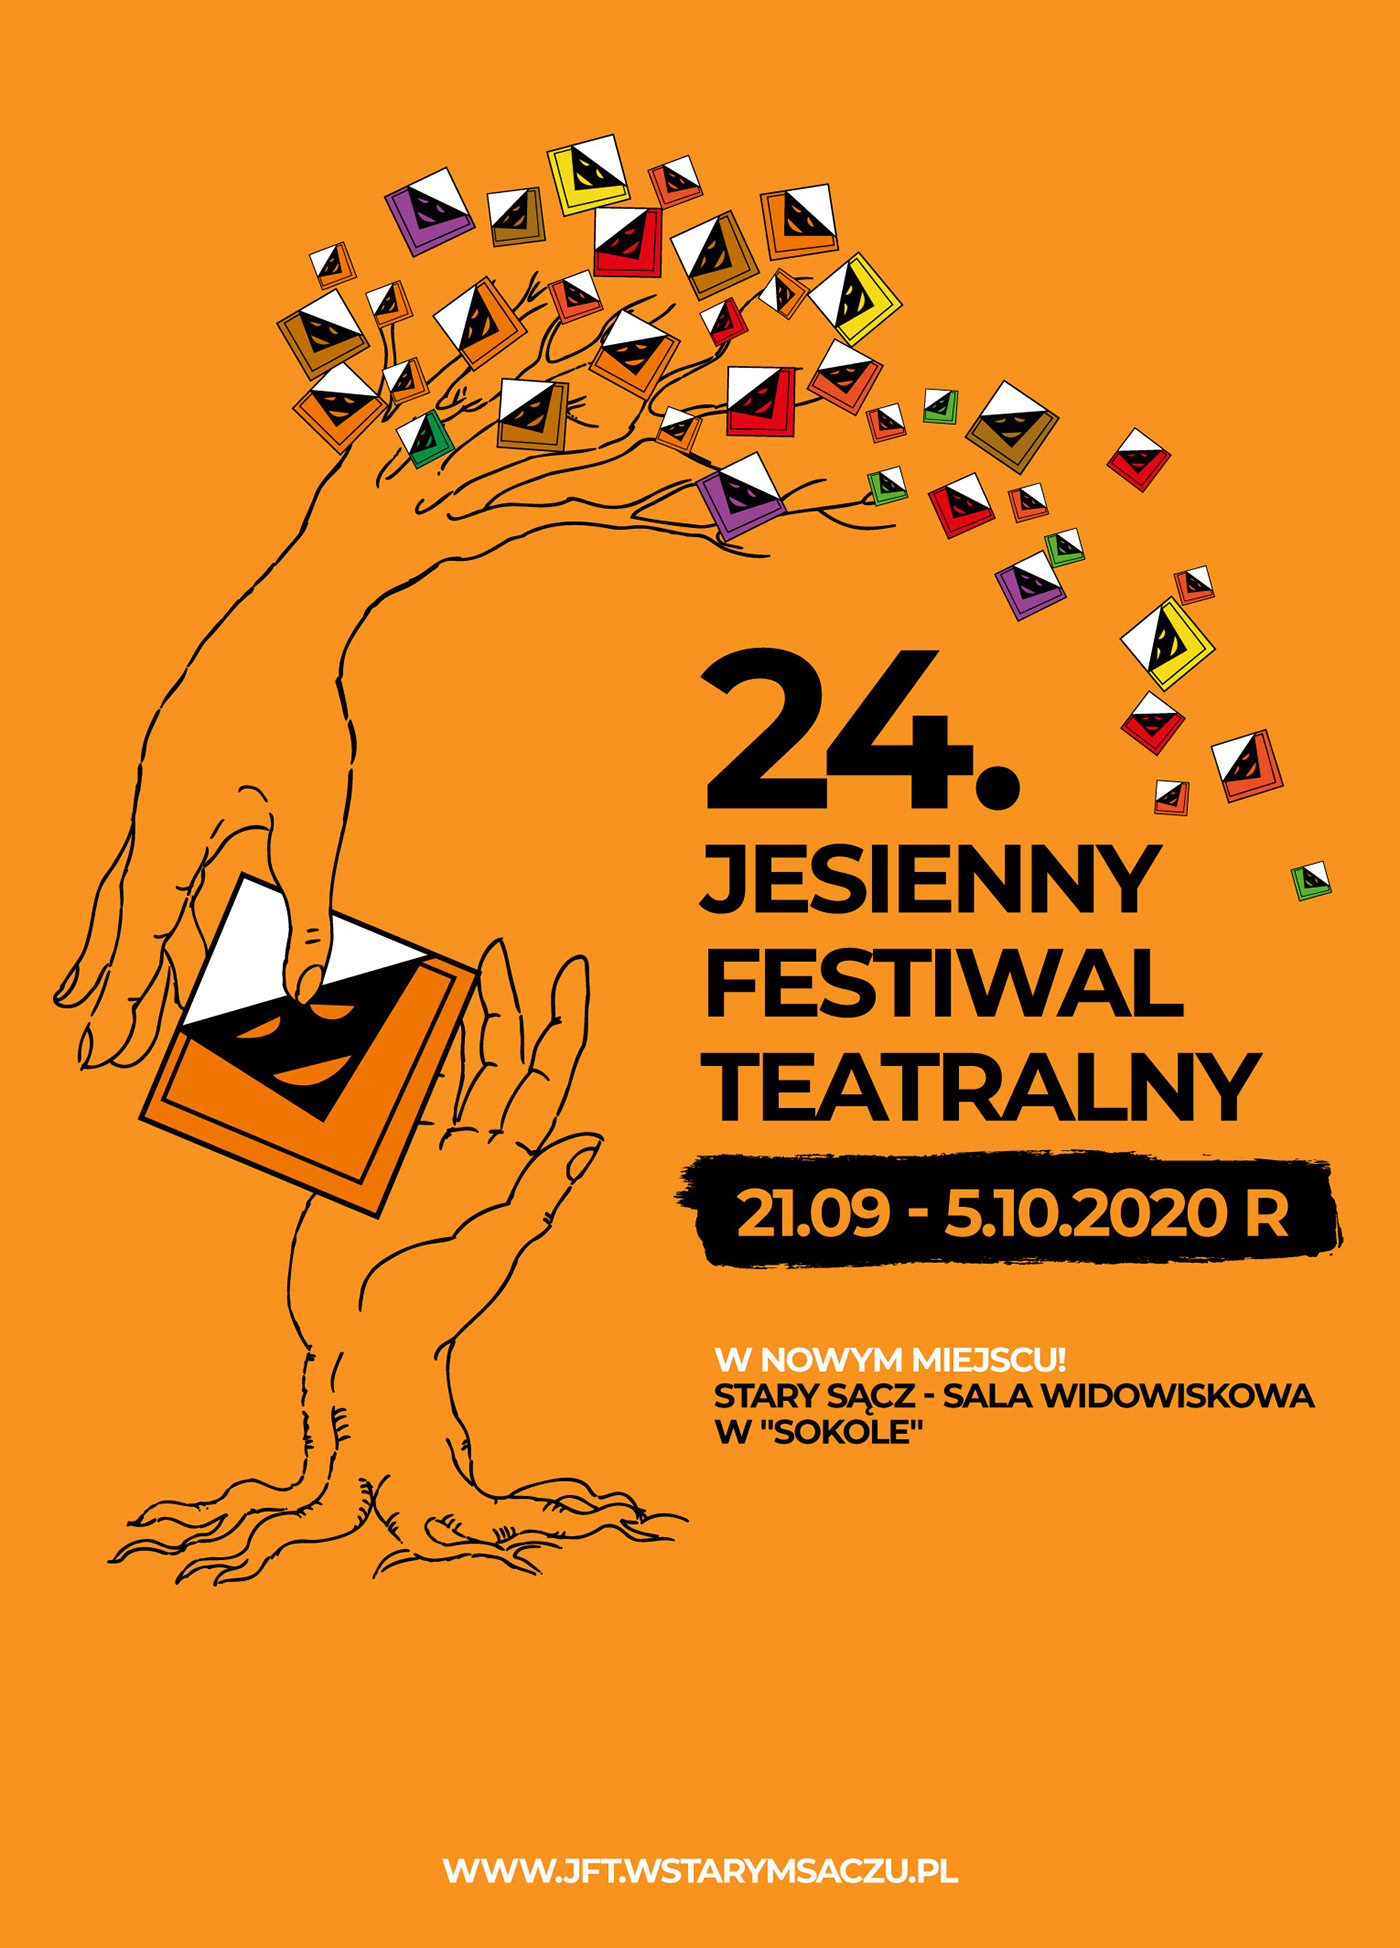 Poster designed by Oskar Semik, depicting a tree transformed into hands with festivals logo